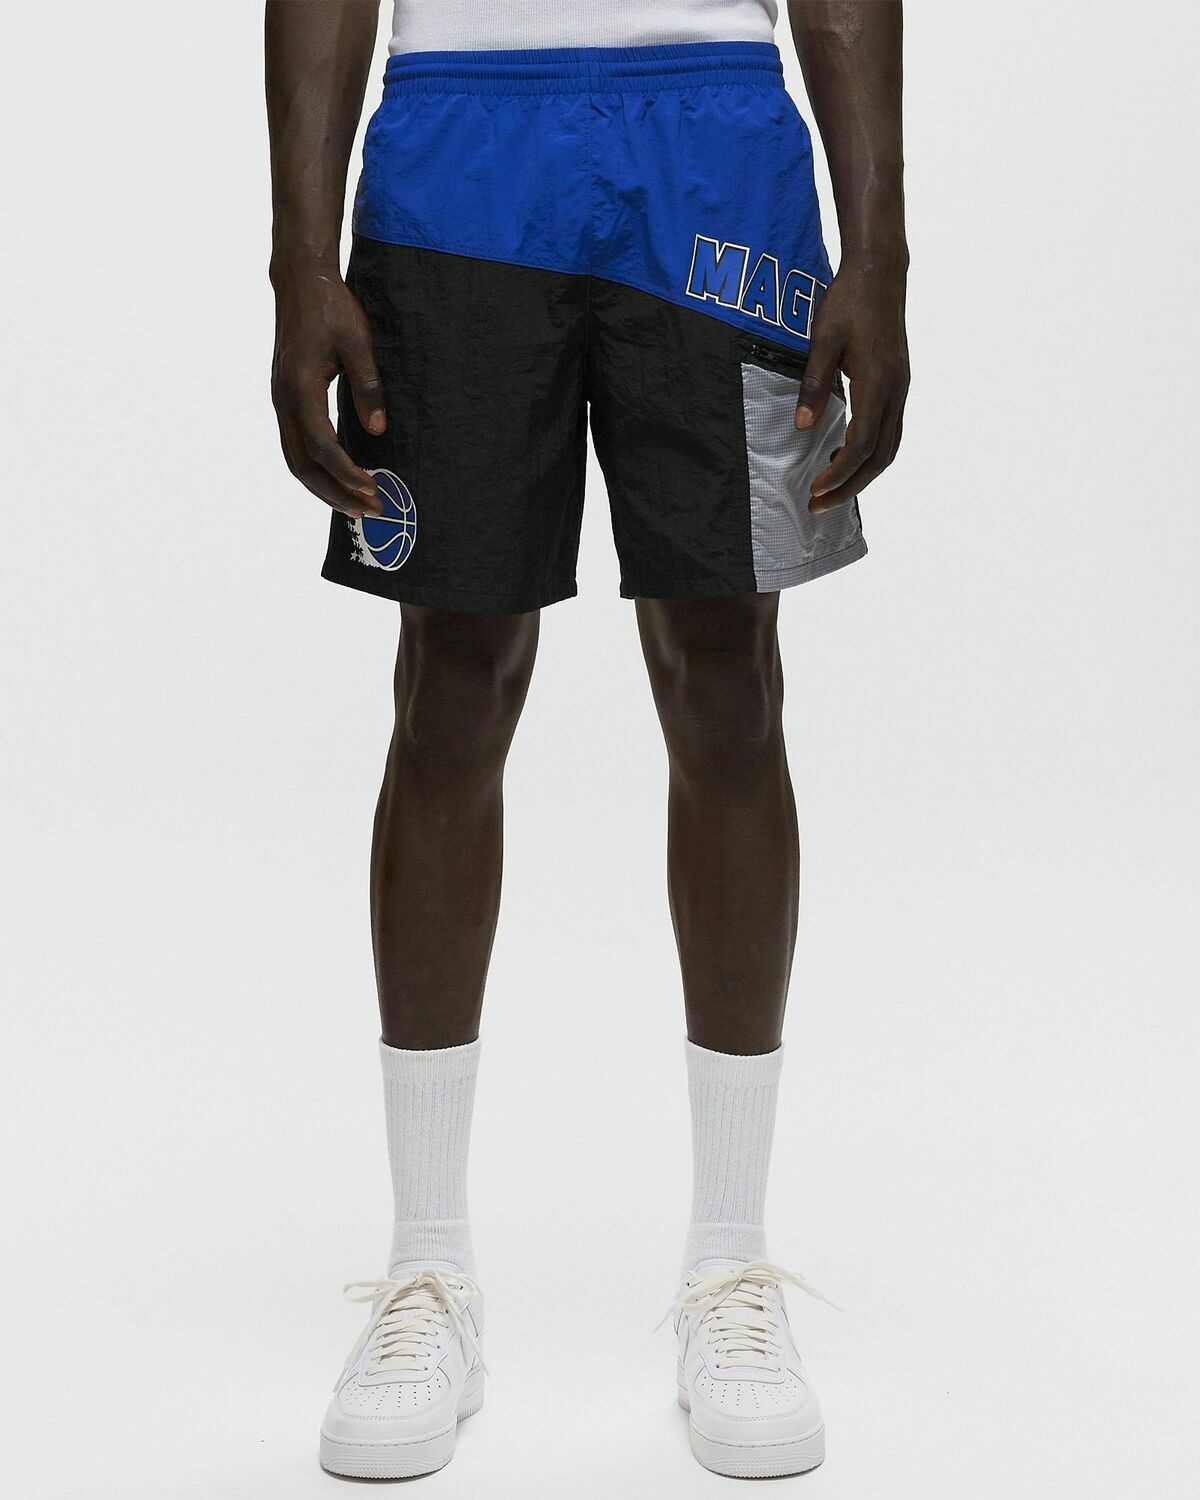 Mitchell & Ness Nba Nylon Utility Short Orlando Magic Black/Blue - Mens - Sport & Team Shorts